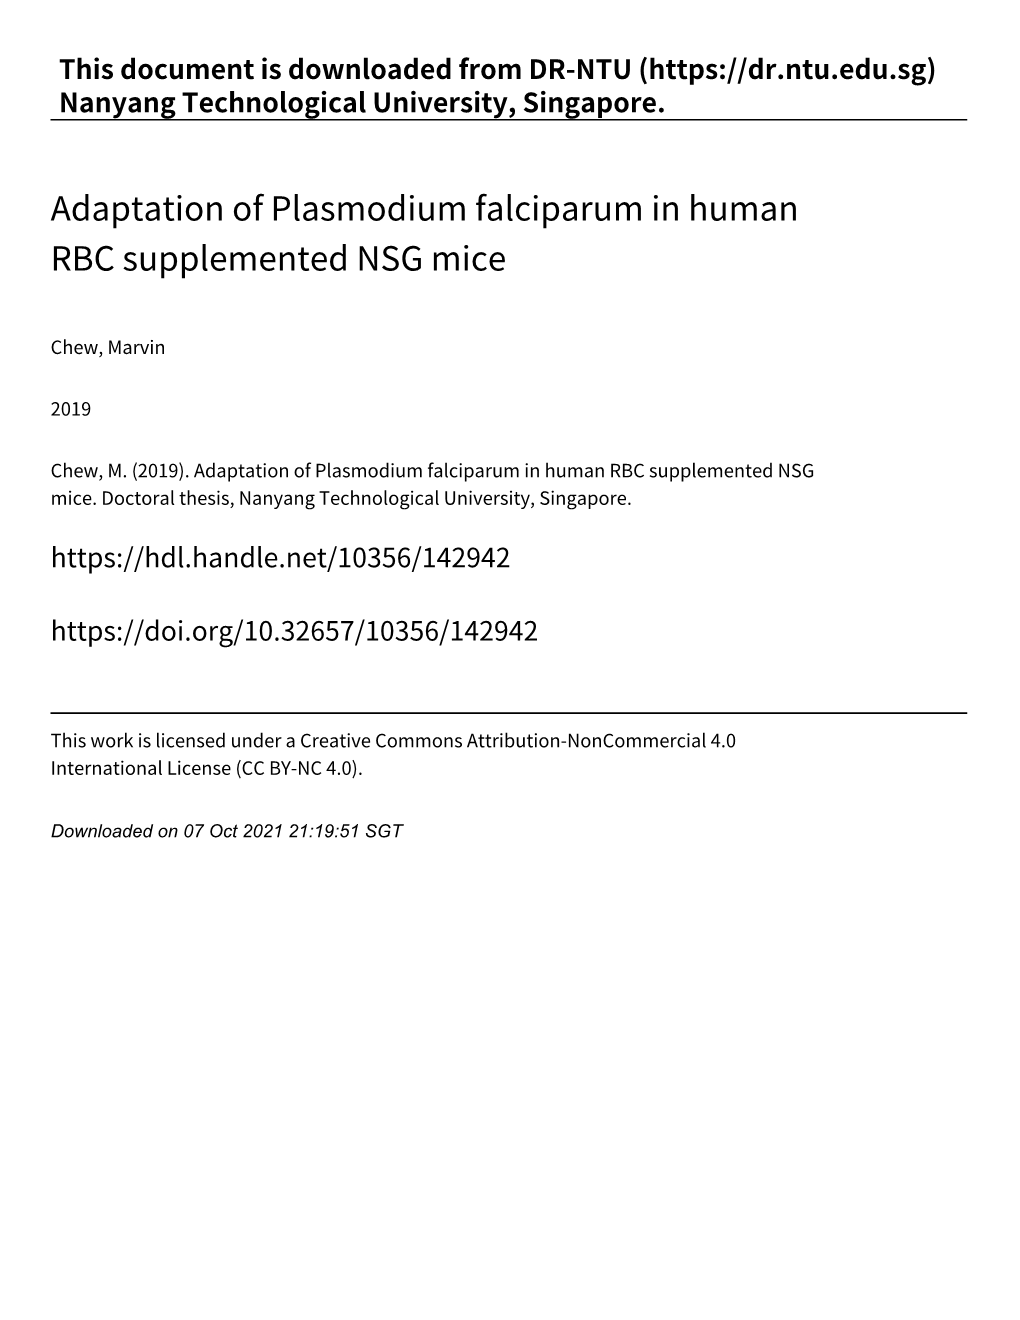 Adaptation of Plasmodium Falciparum in Human RBC Supplemented NSG Mice